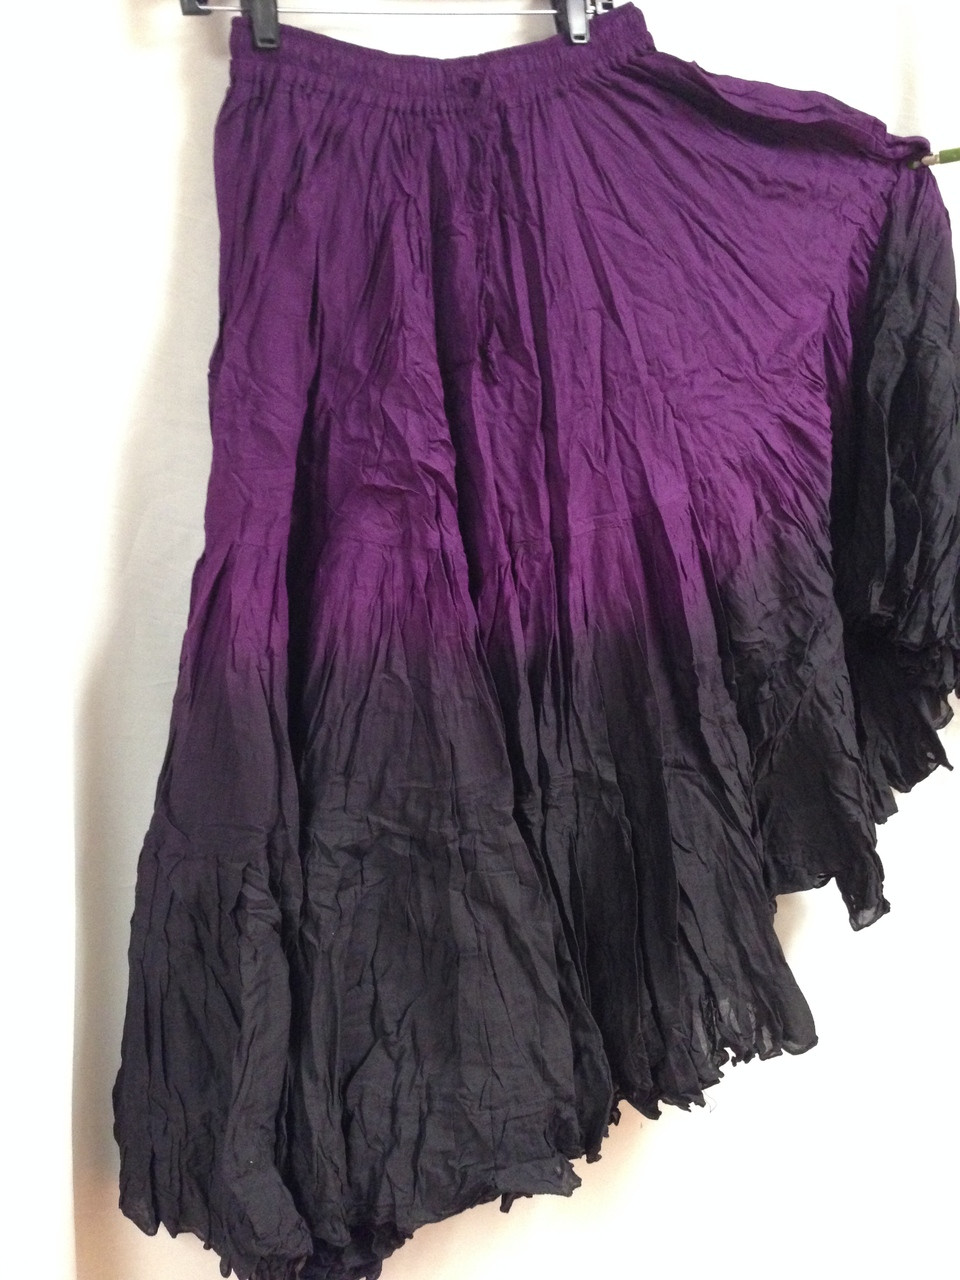 DIP DYE- 25-Yard Pure Cotton Skirts - Shaded Purple Black - Magical ...